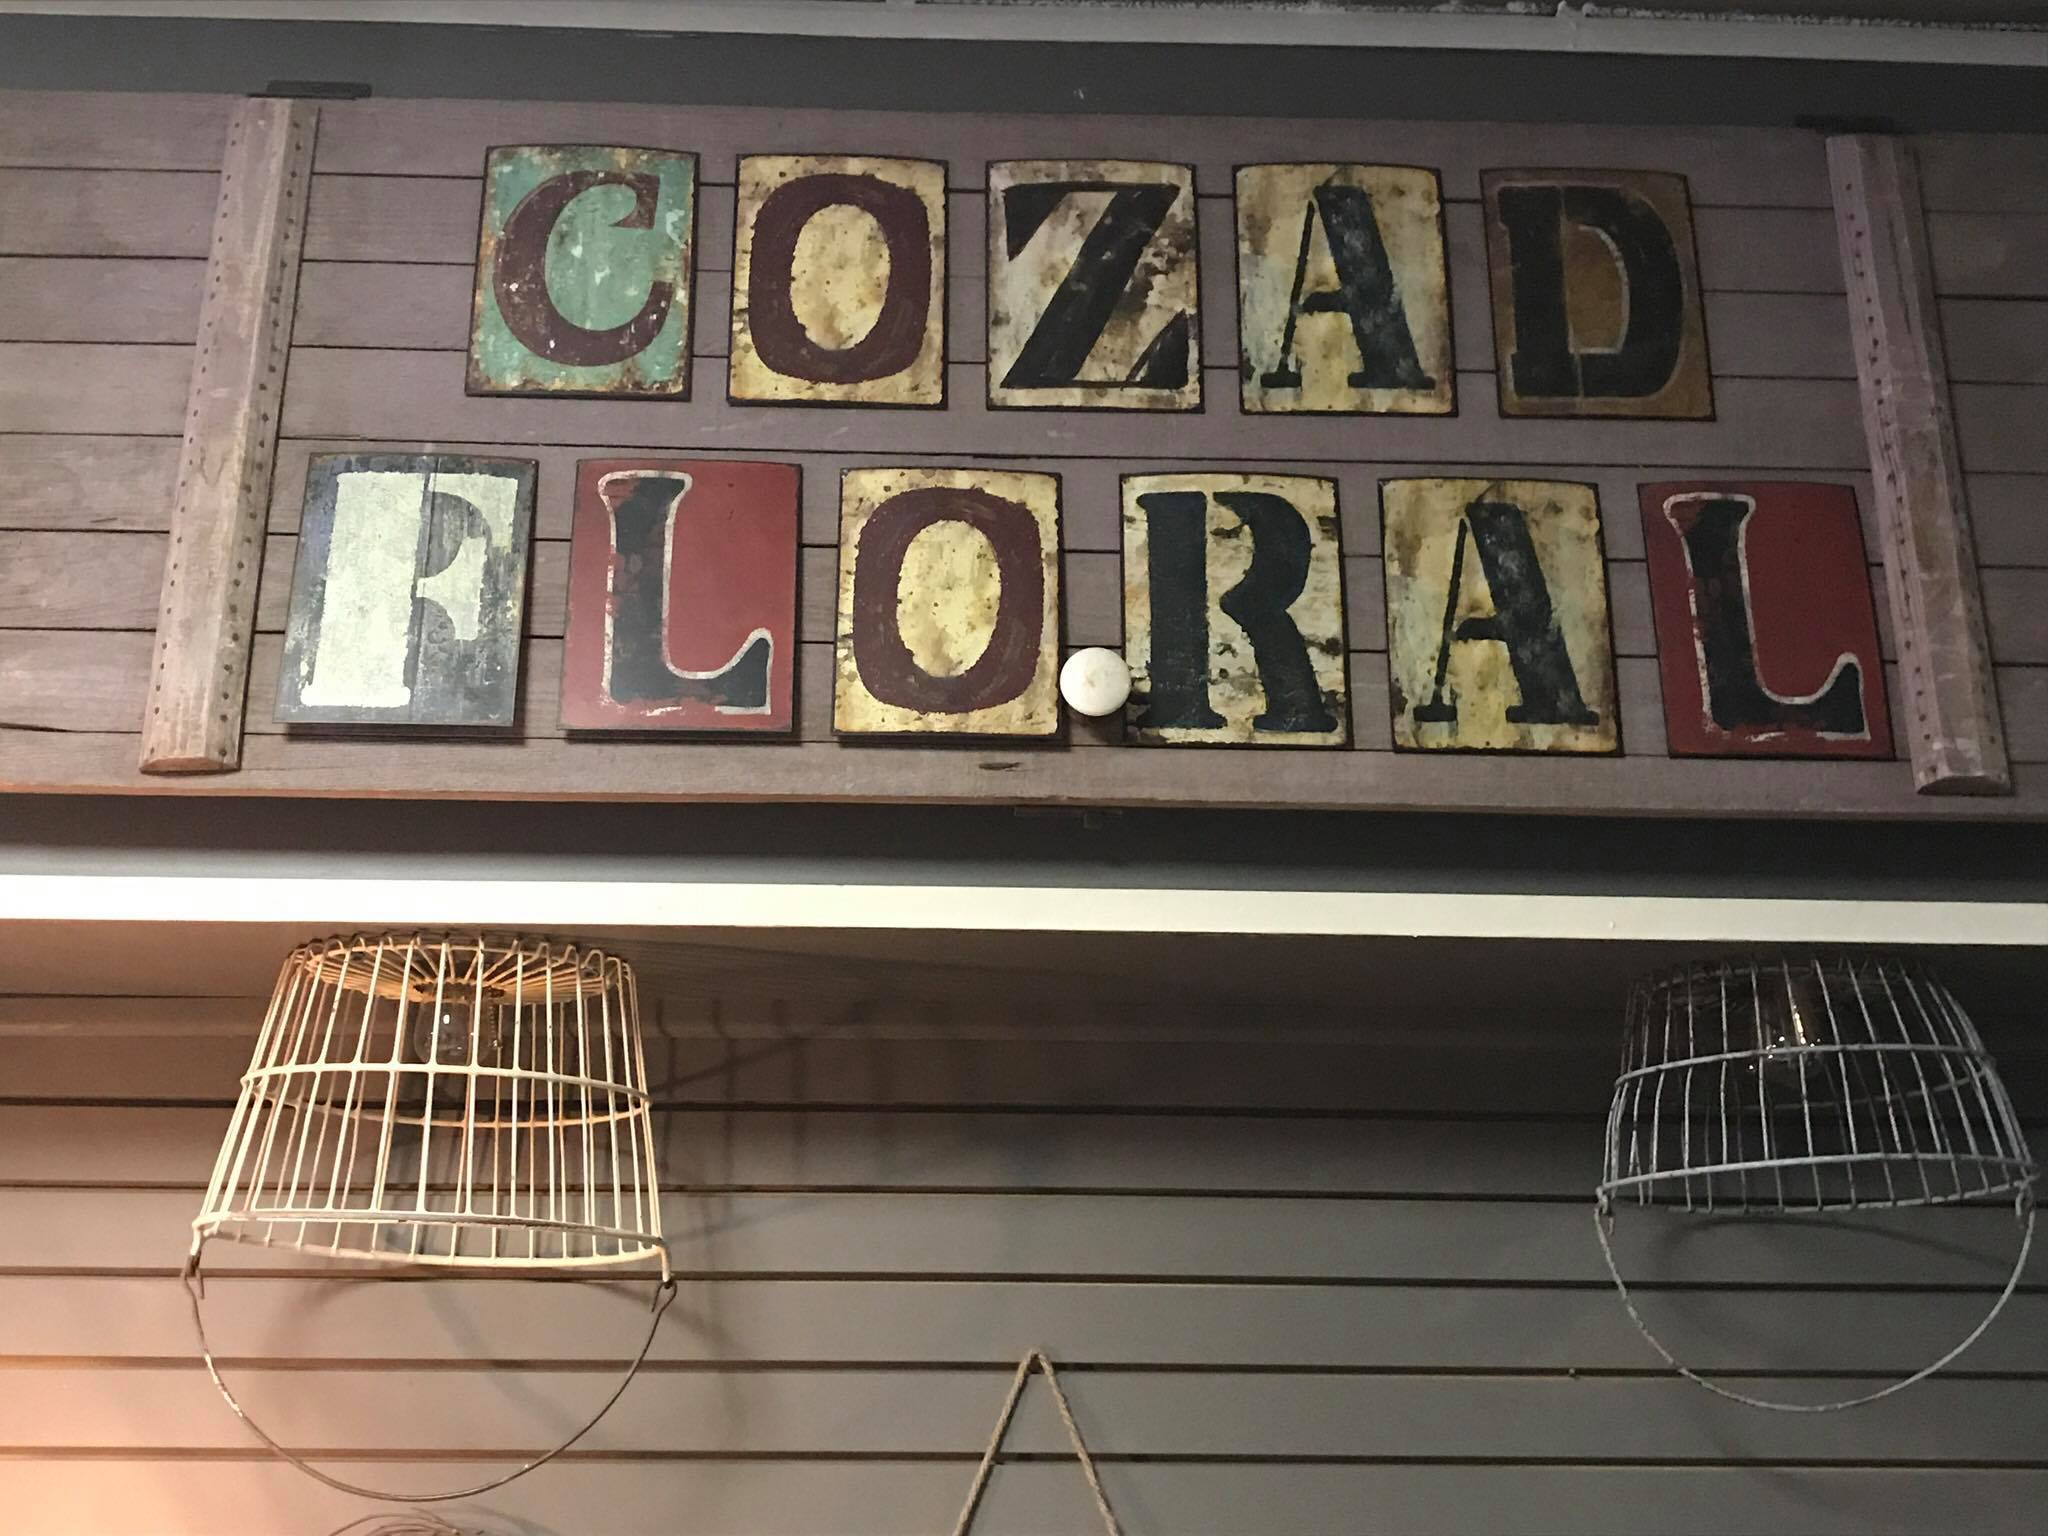 Cozad Floral & Gifts 819 Meridian Ave, Cozad Nebraska 69130